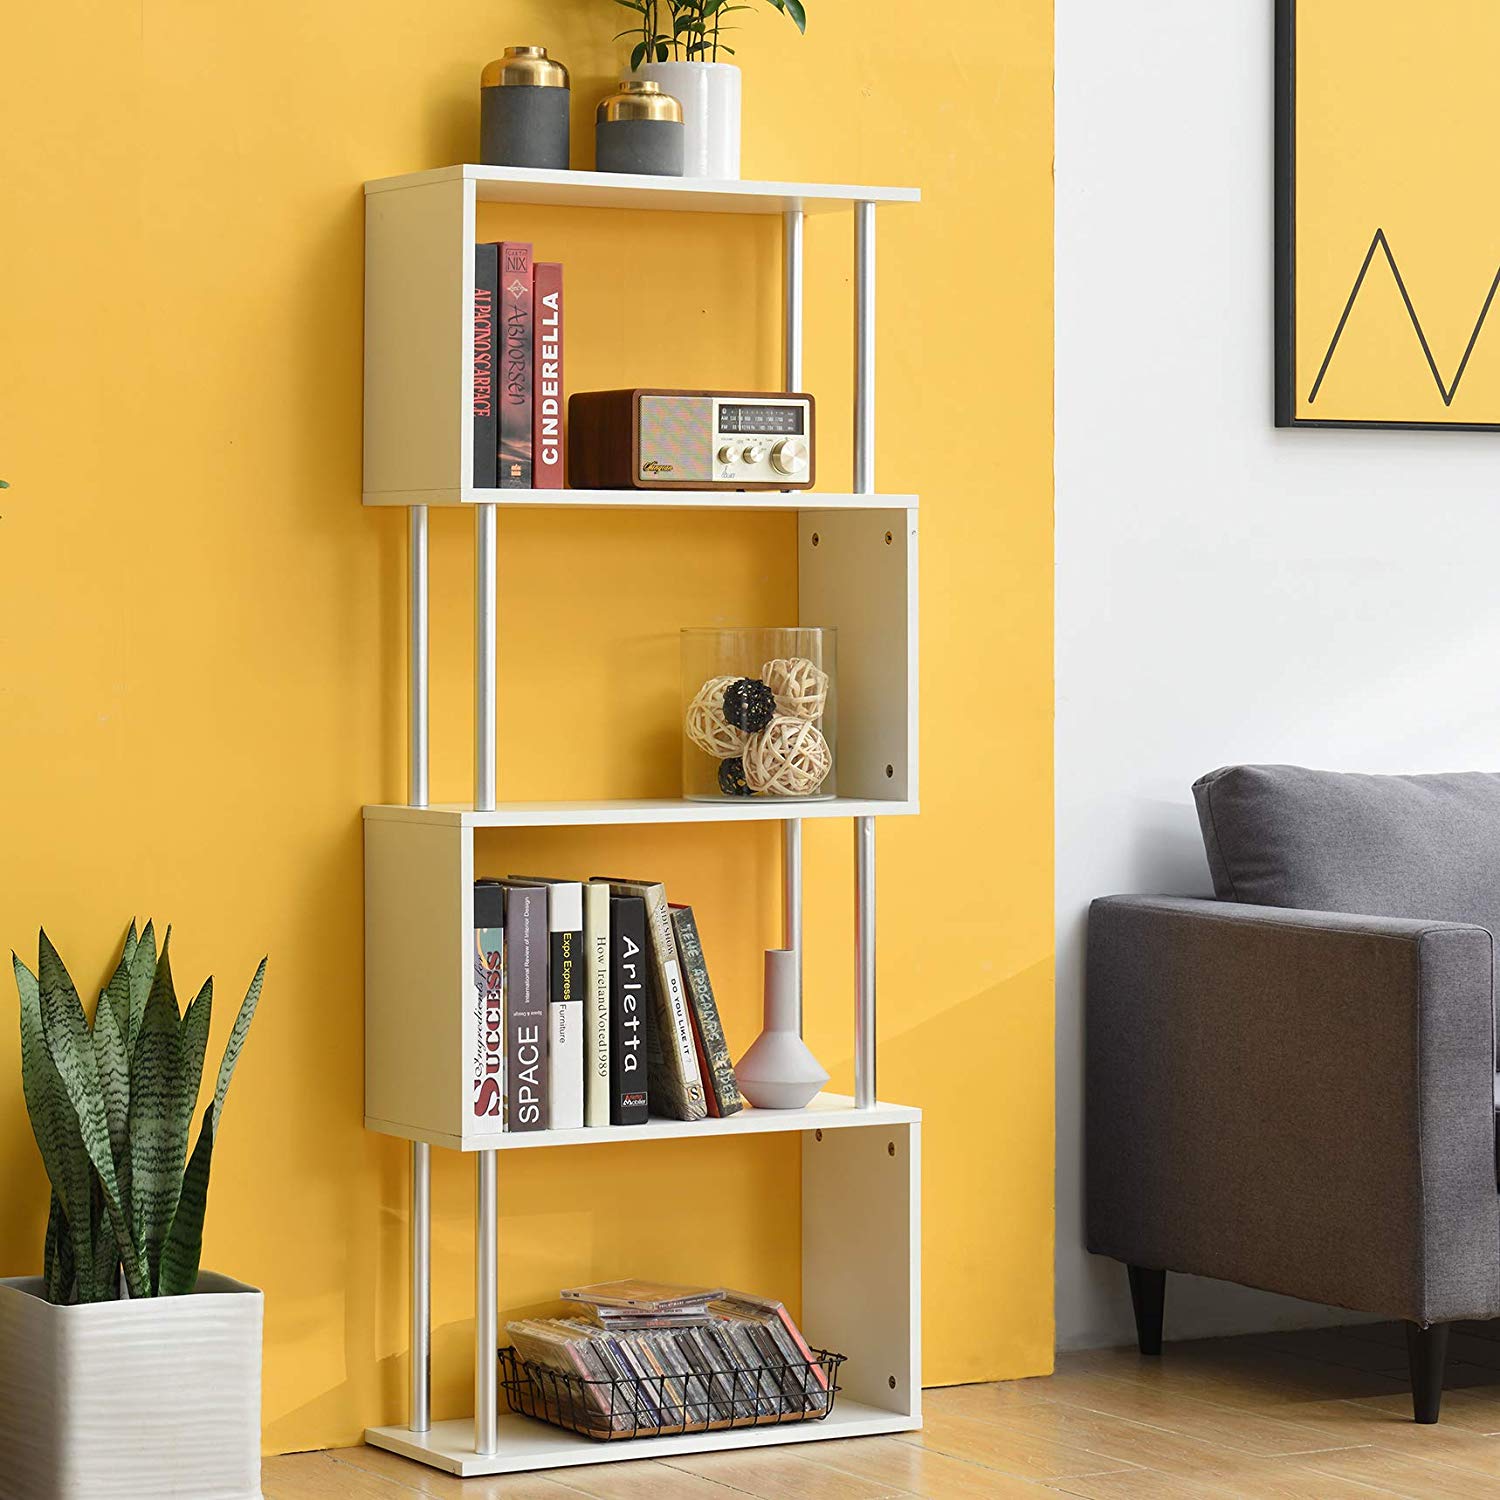 Cherry Tree Furniture FLAM Bookcase Shelving Unit Display Shelf White,